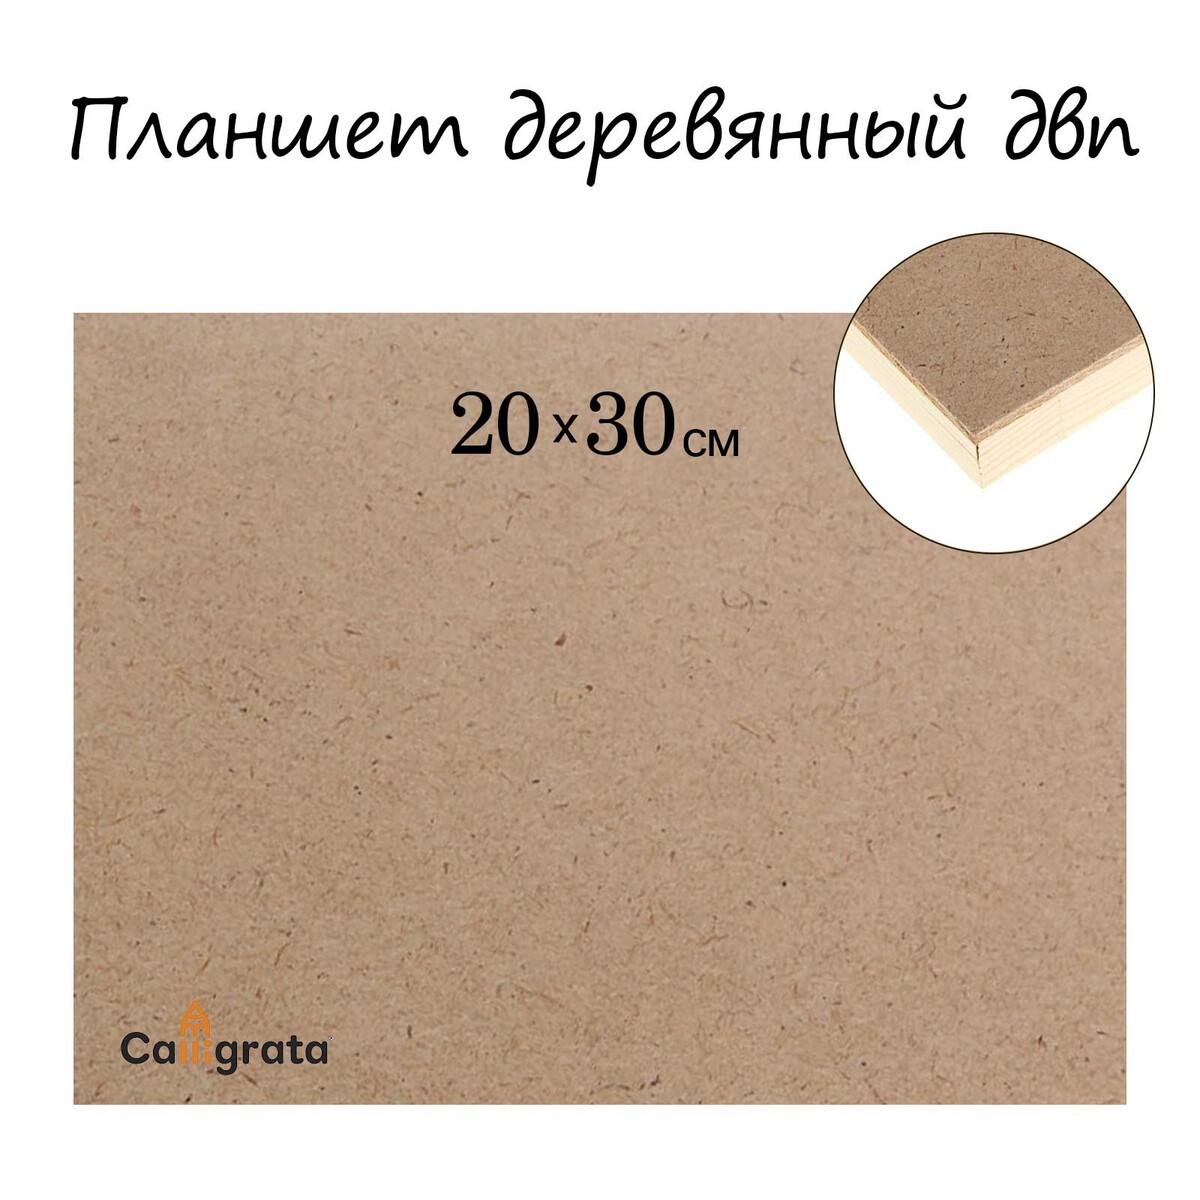 Планшет деревянный, 20 х 30 х 2 см, двп Calligrata 0966157 - фото 1